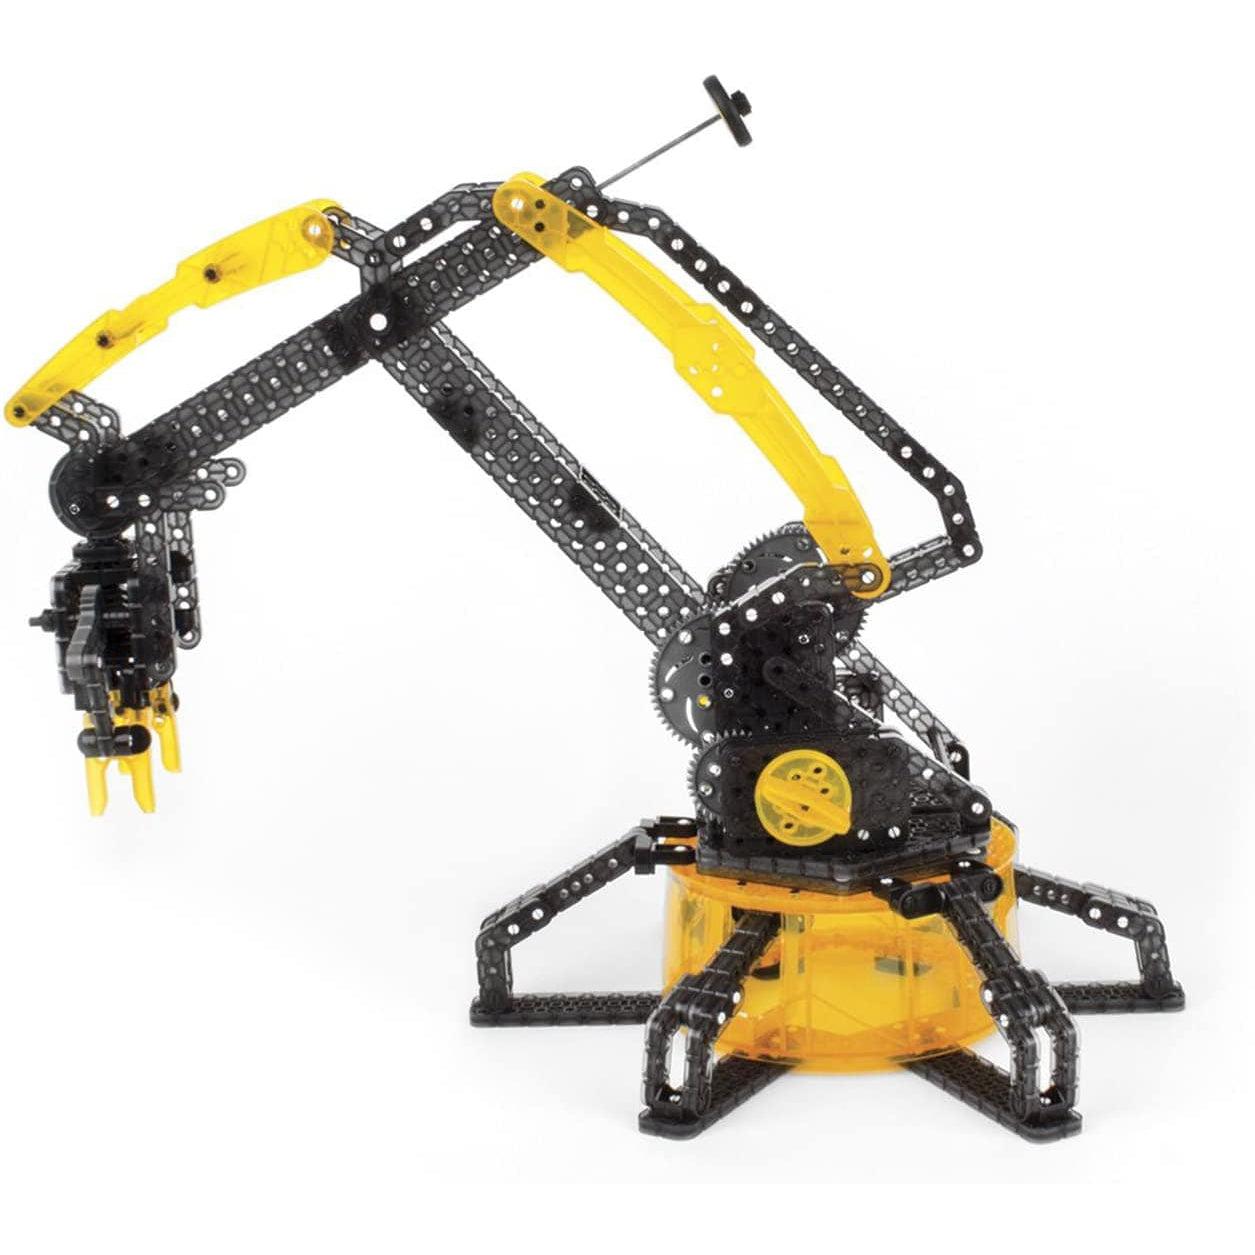 Hexbug Vex Robotics Robotic Arm Construction Kit